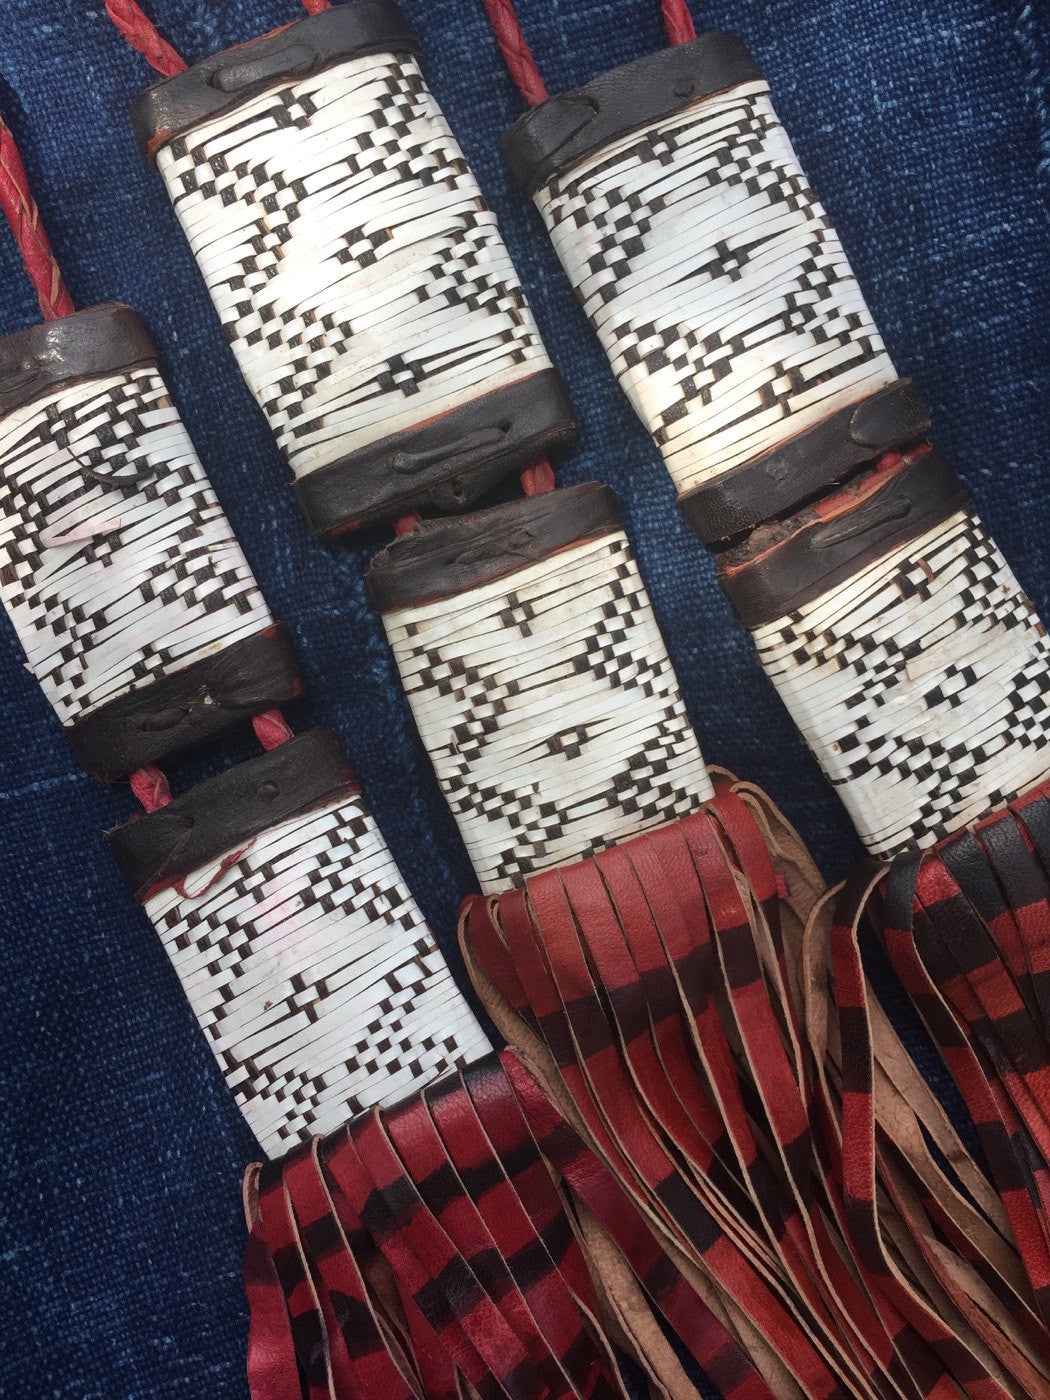 Tassel King: Large African Tuareg Geometric Tribal Leather Fringe, Boho Jewelry Supply, Decor, Accessory, Necklace Pendant, Charm 1 piece - ShopWomanShopsWorld.com. Bone Beads, Tassels, Pom Poms, African Beads.